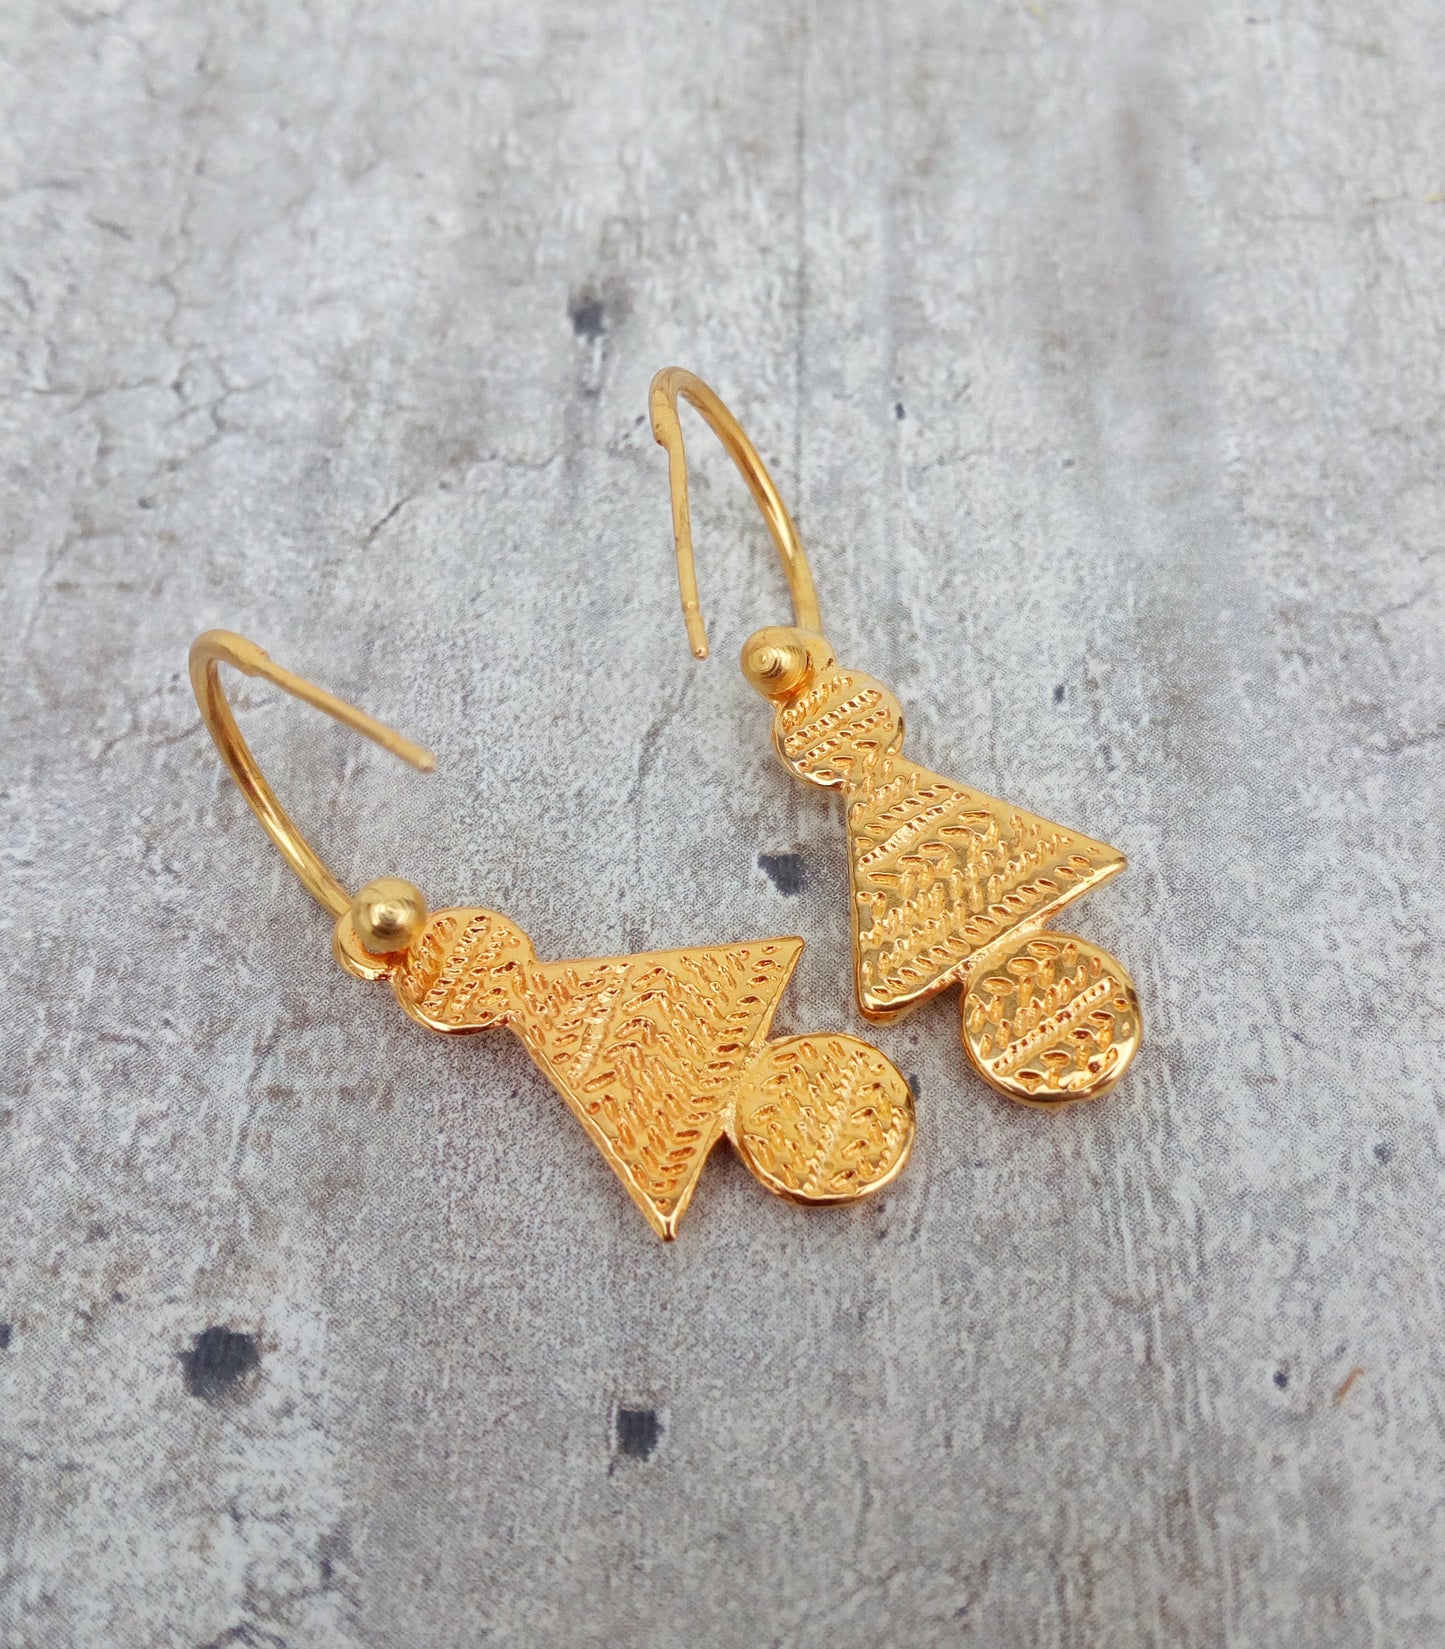 Small Gold Hoop Earrings, Huggie Earrings With Byzantine Charm